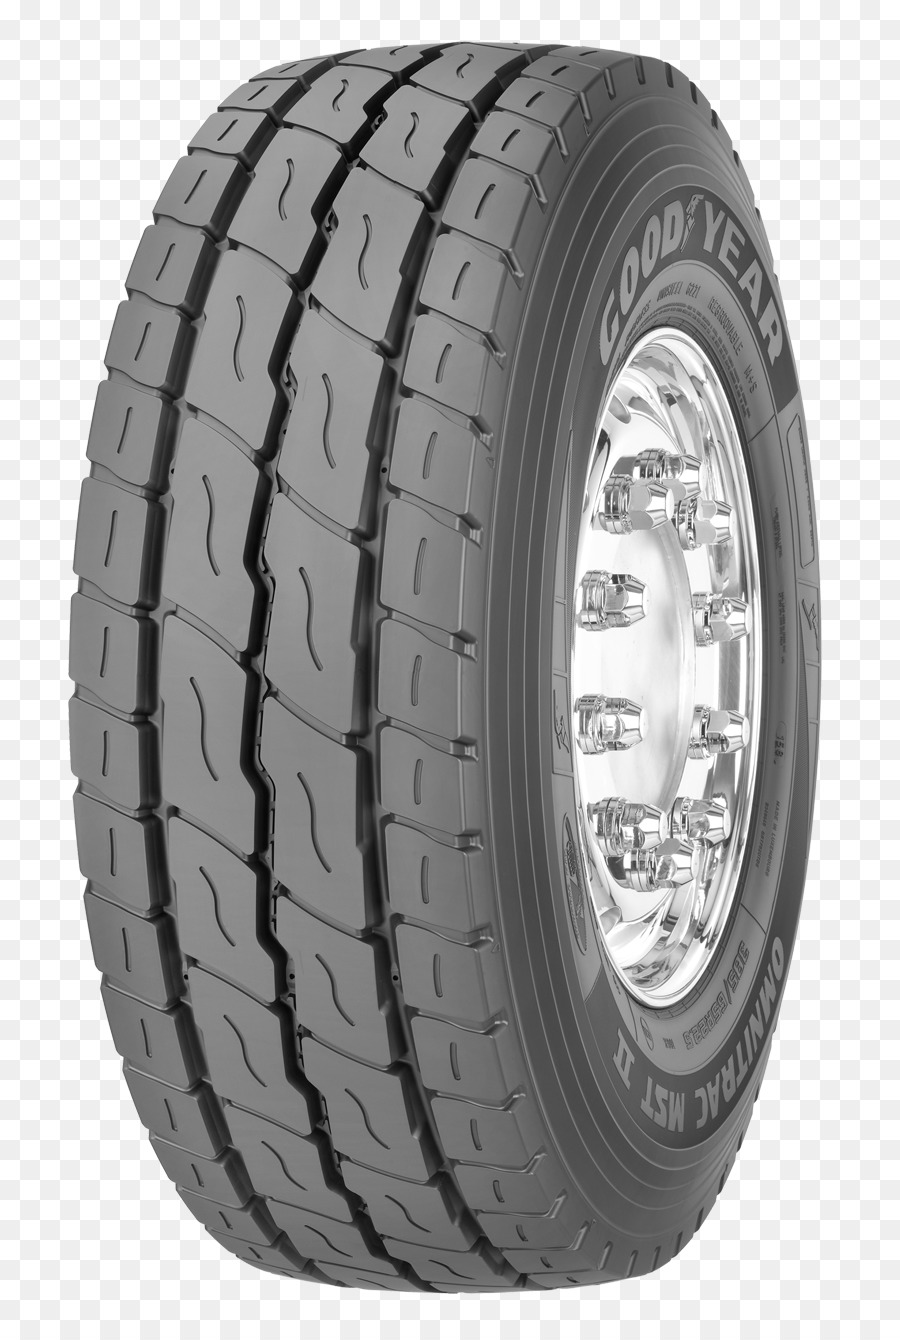 Auto Goodyear Tire und Rubber Company die Continental AG Tread - Reifen